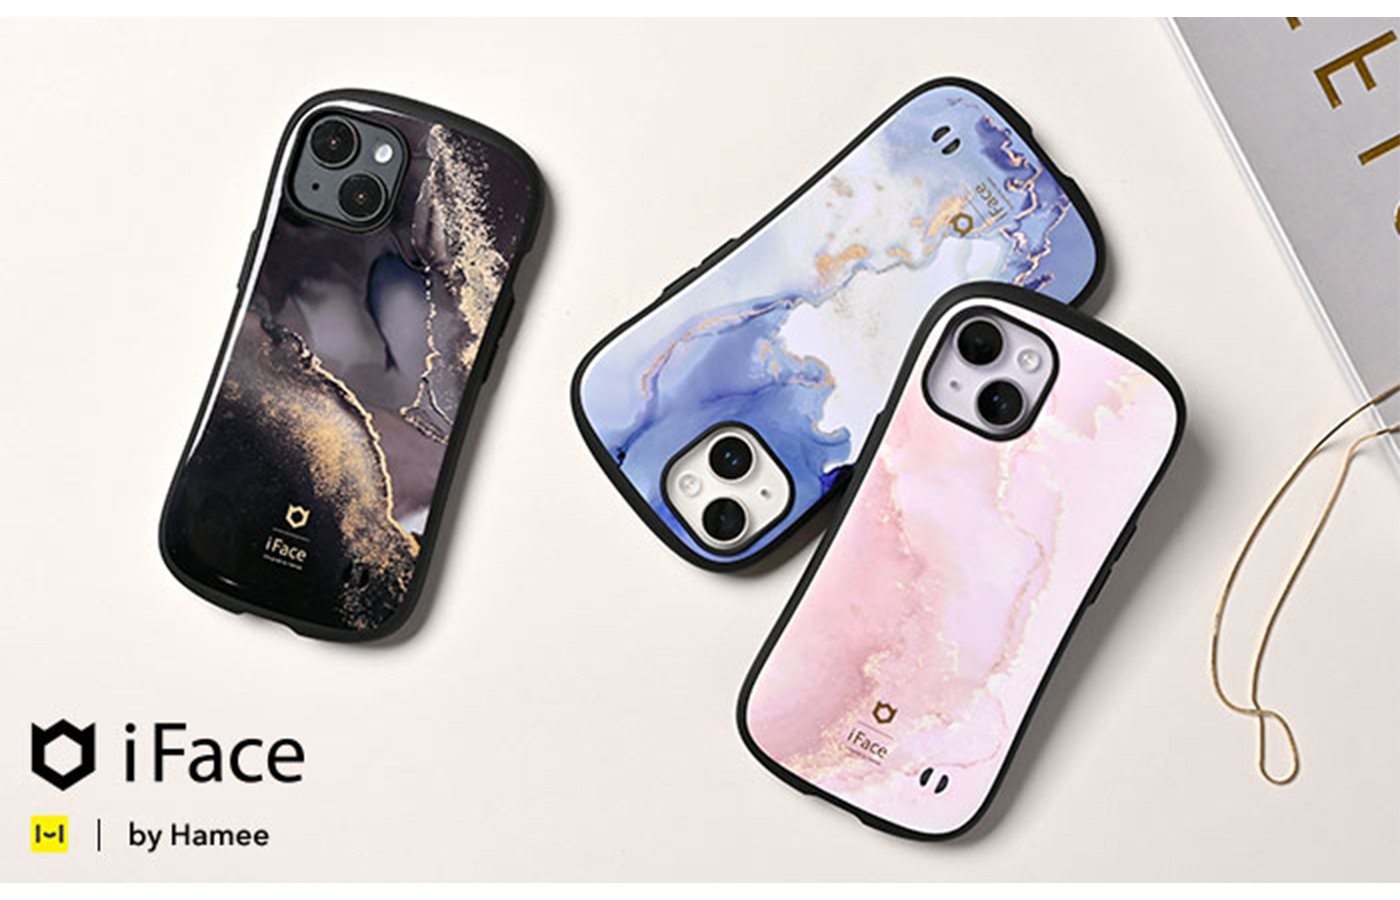 iFaceのiPhoneケースシリーズから大理石調のマーブル模様が高級感を演出する大人デザインの新色が登場！